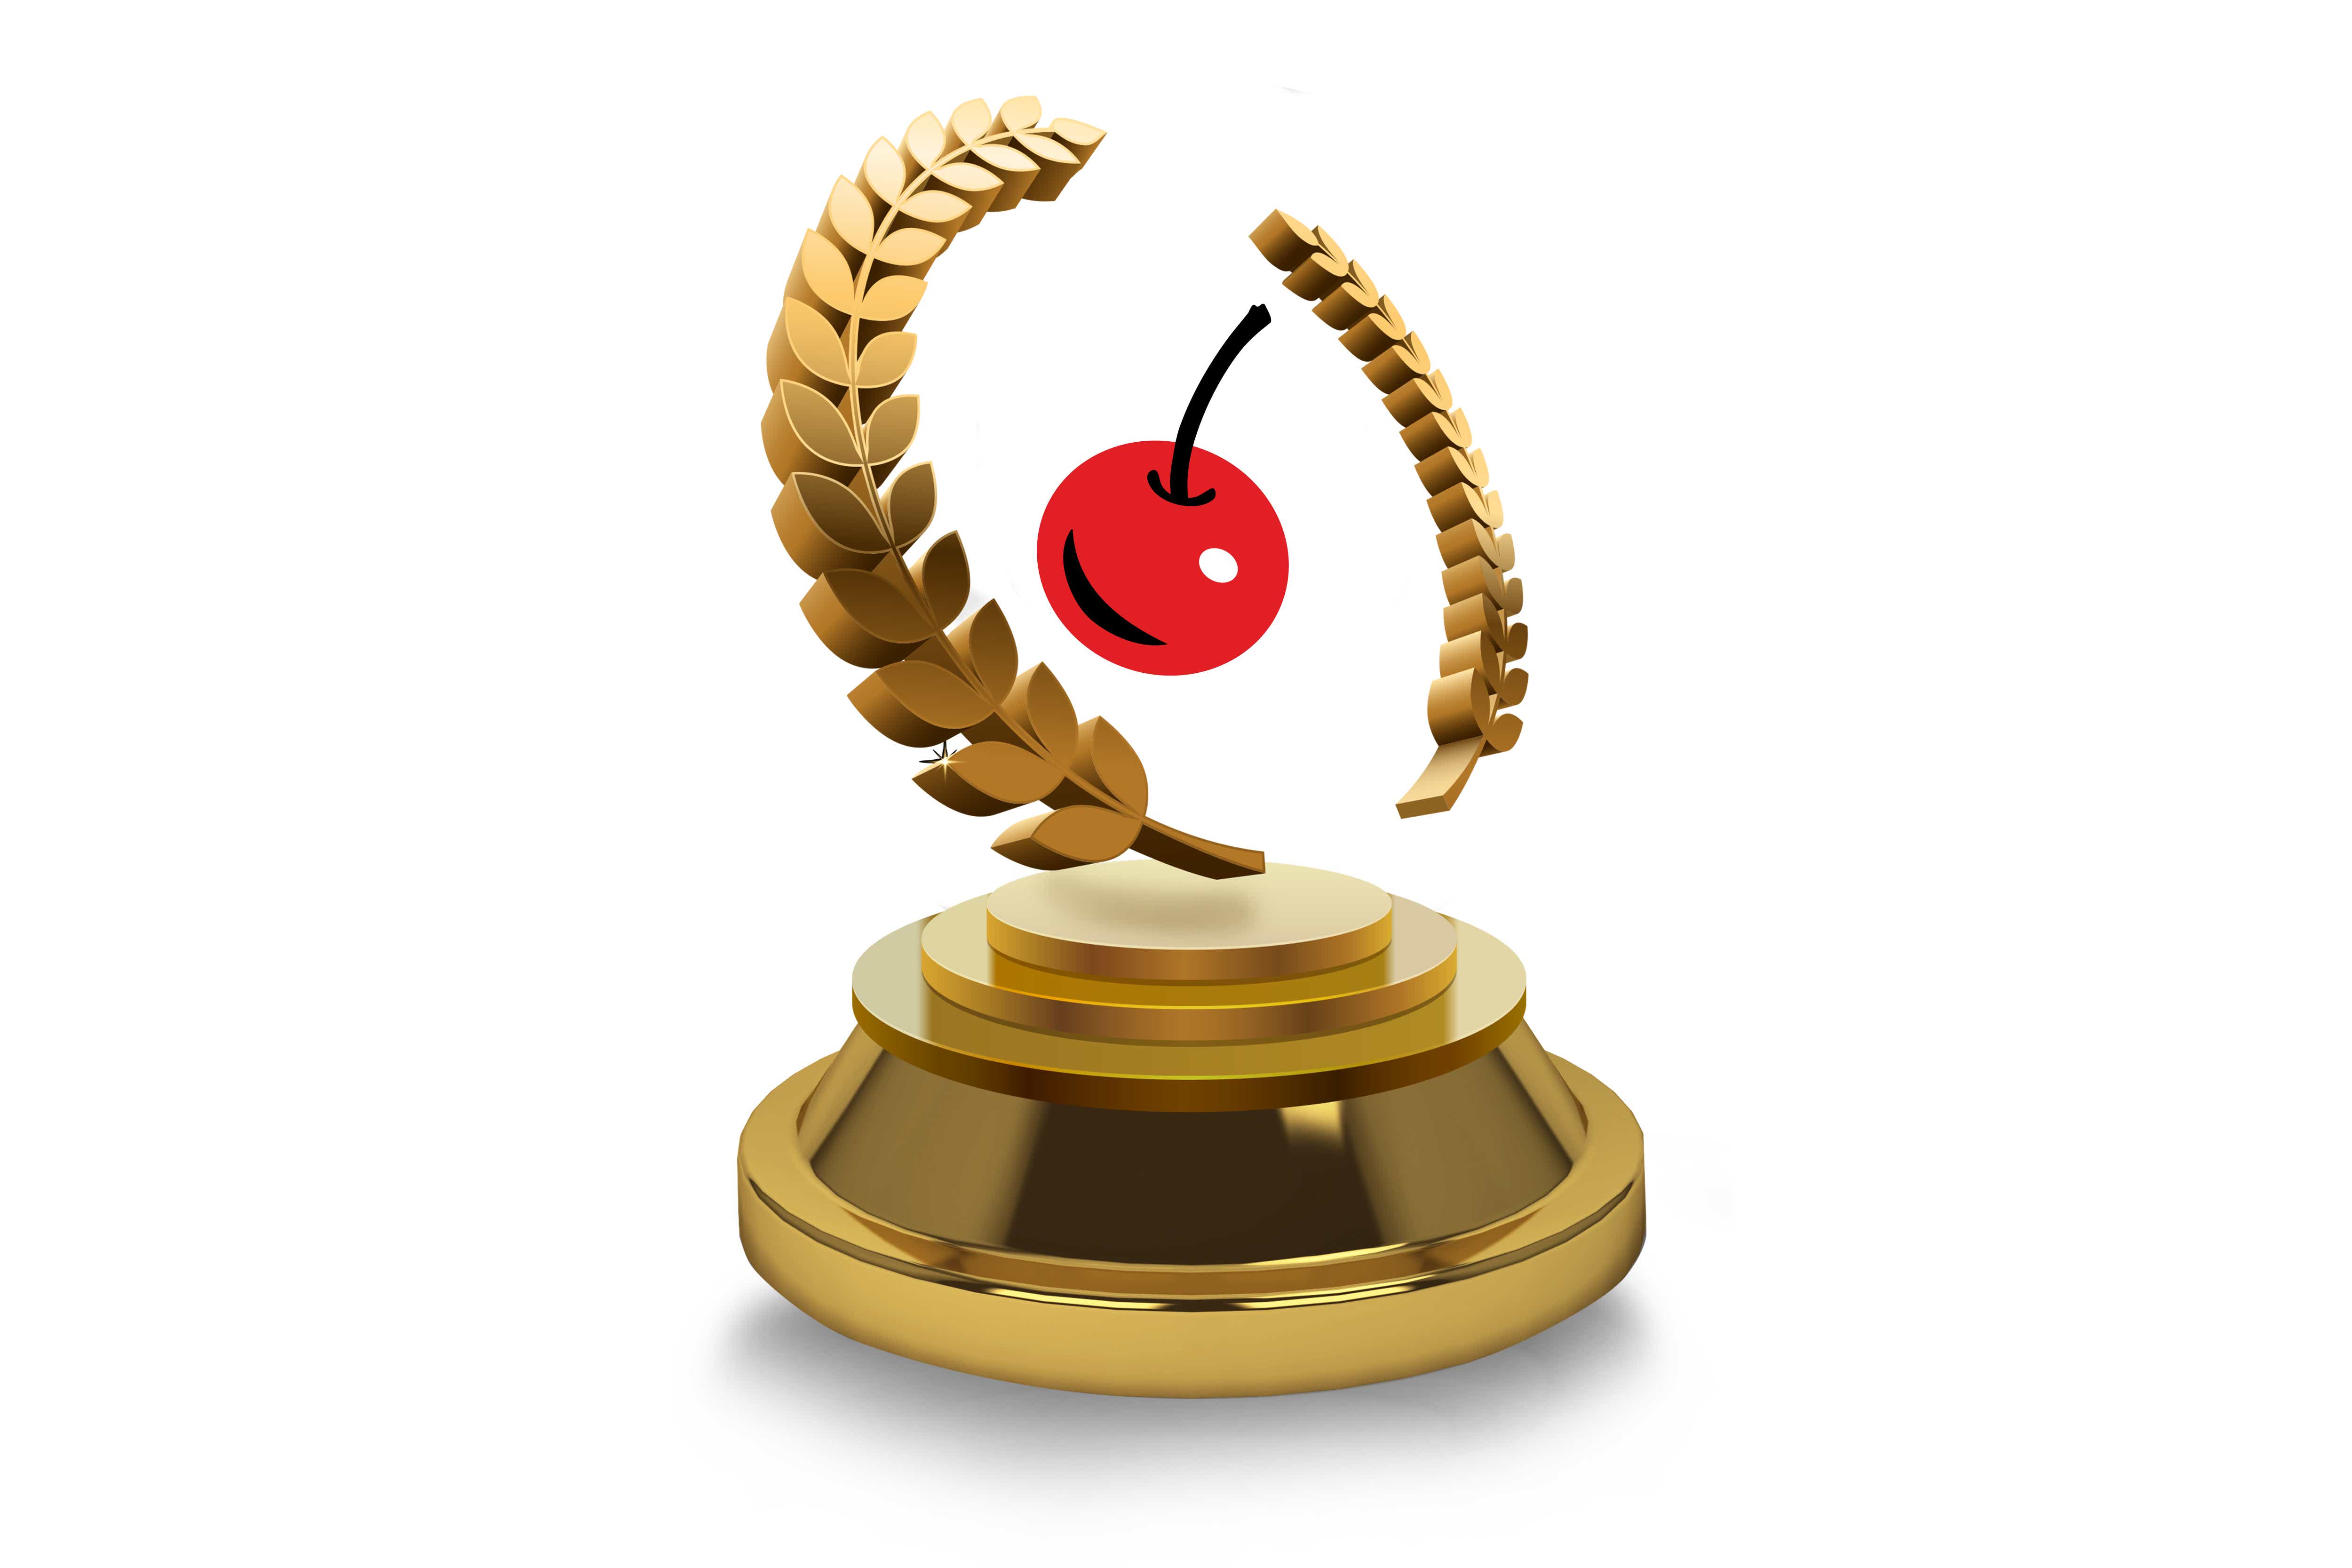 Floating tastyworks logo inside of a gold laurel wreath on a pedestal to signify victory